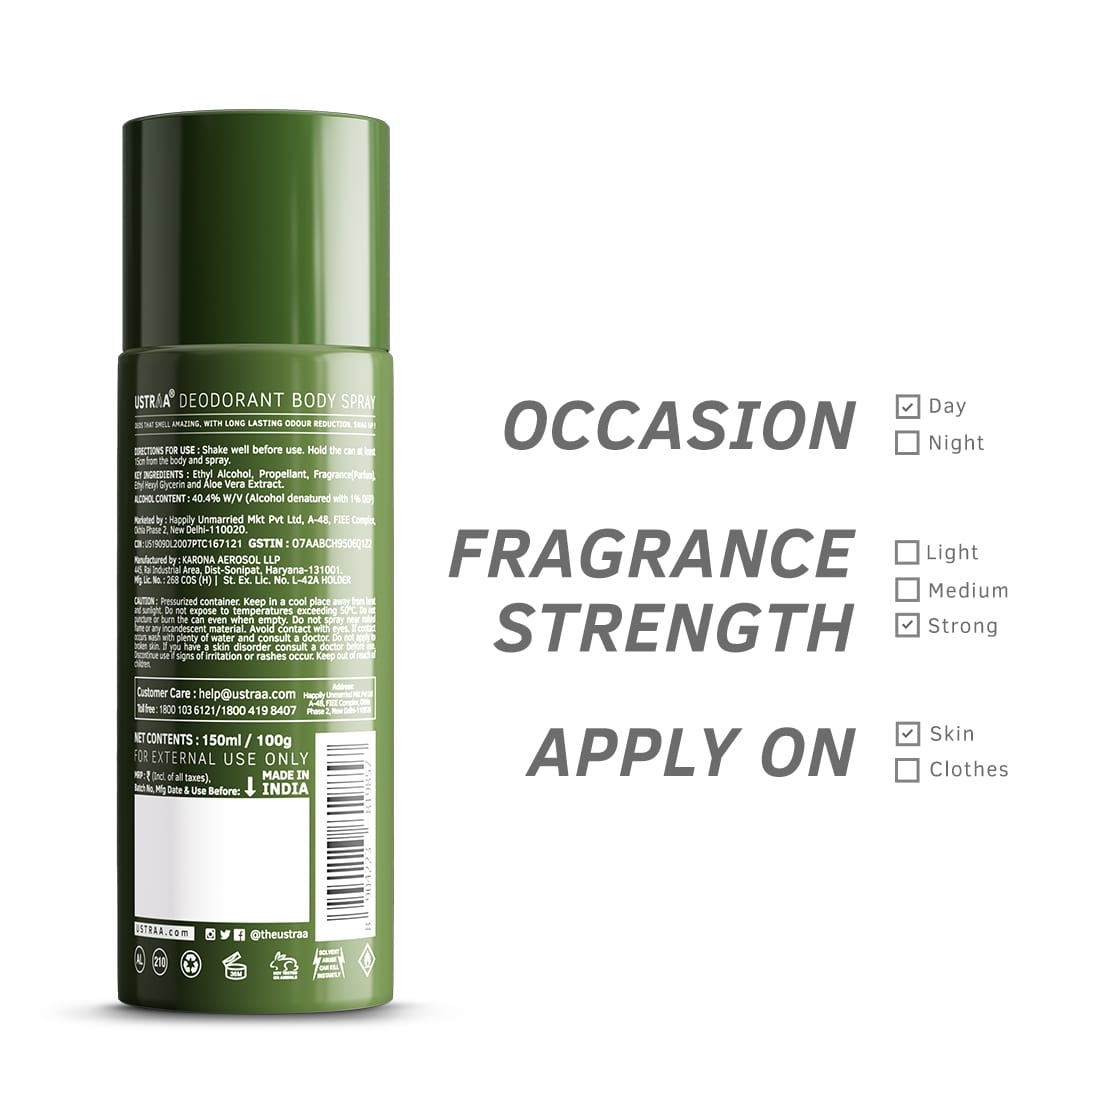 Ustraa O.g Deodorant Body Spray - 150ml - A Strong Passionate Fragrance Deodorant Spray For Men